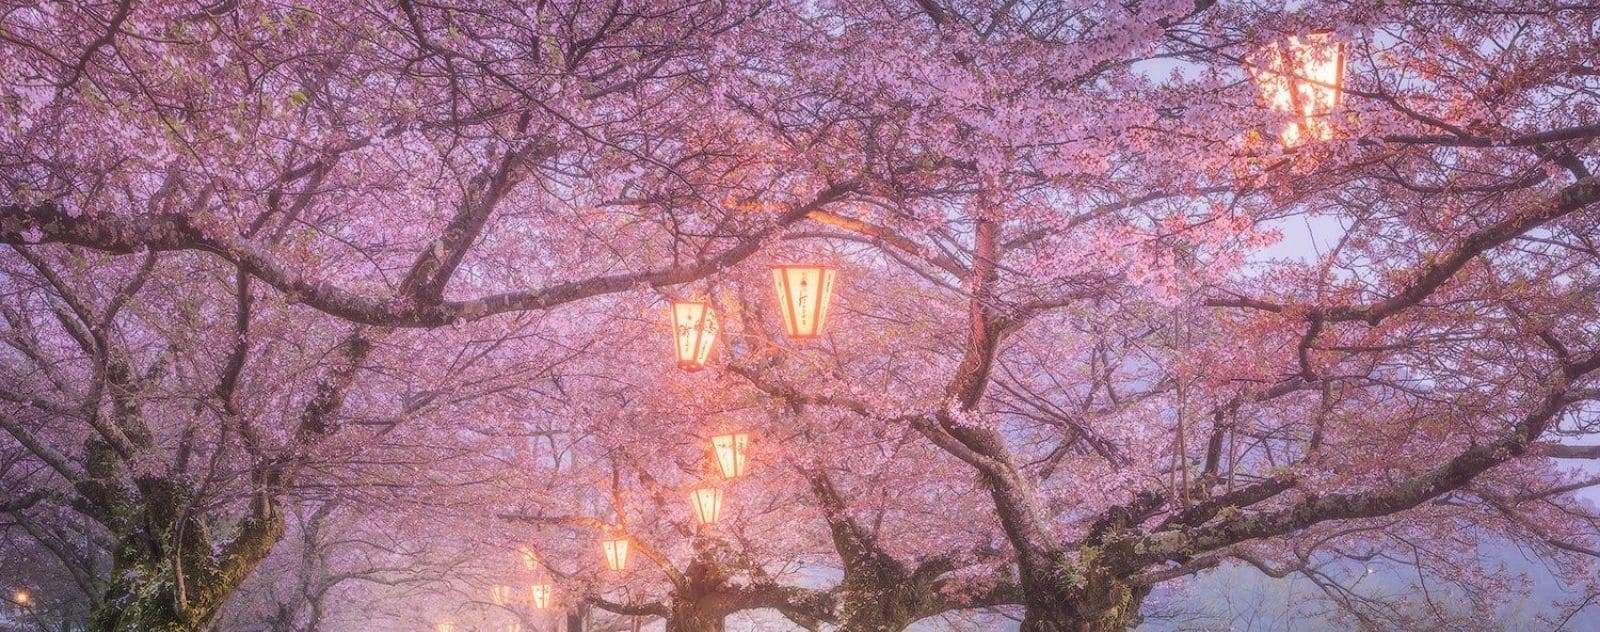 Sakura Day